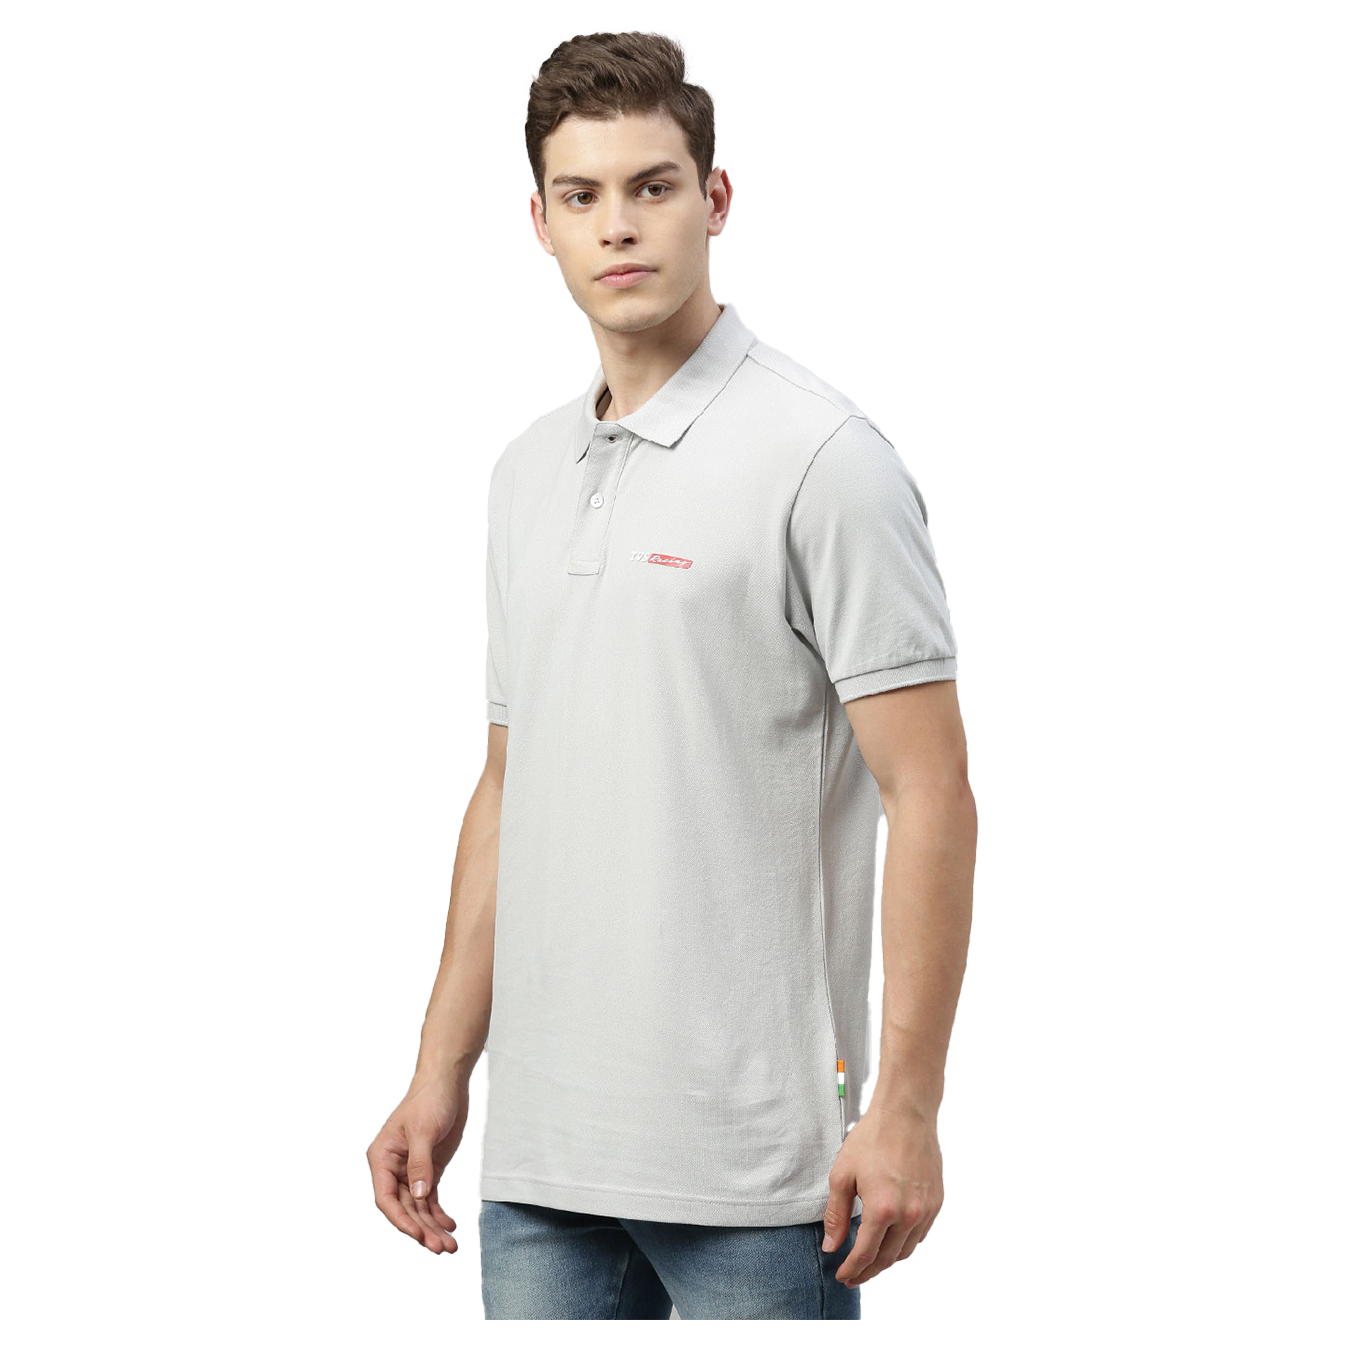  TVS Racing Polo T Shirt Cotton (Grey)